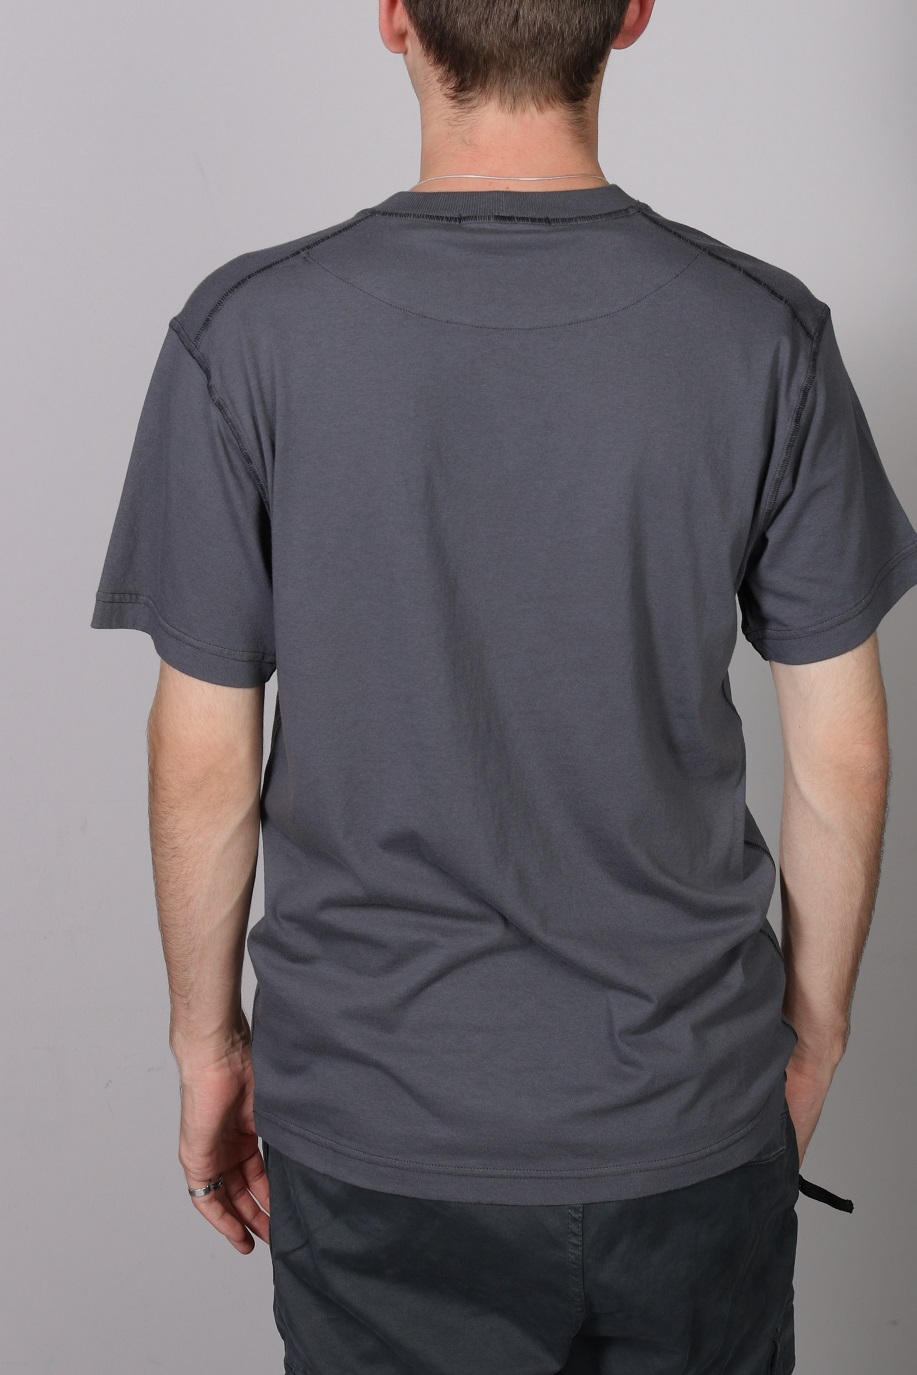 STONE ISLAND T-Shirt in Dark Grey S